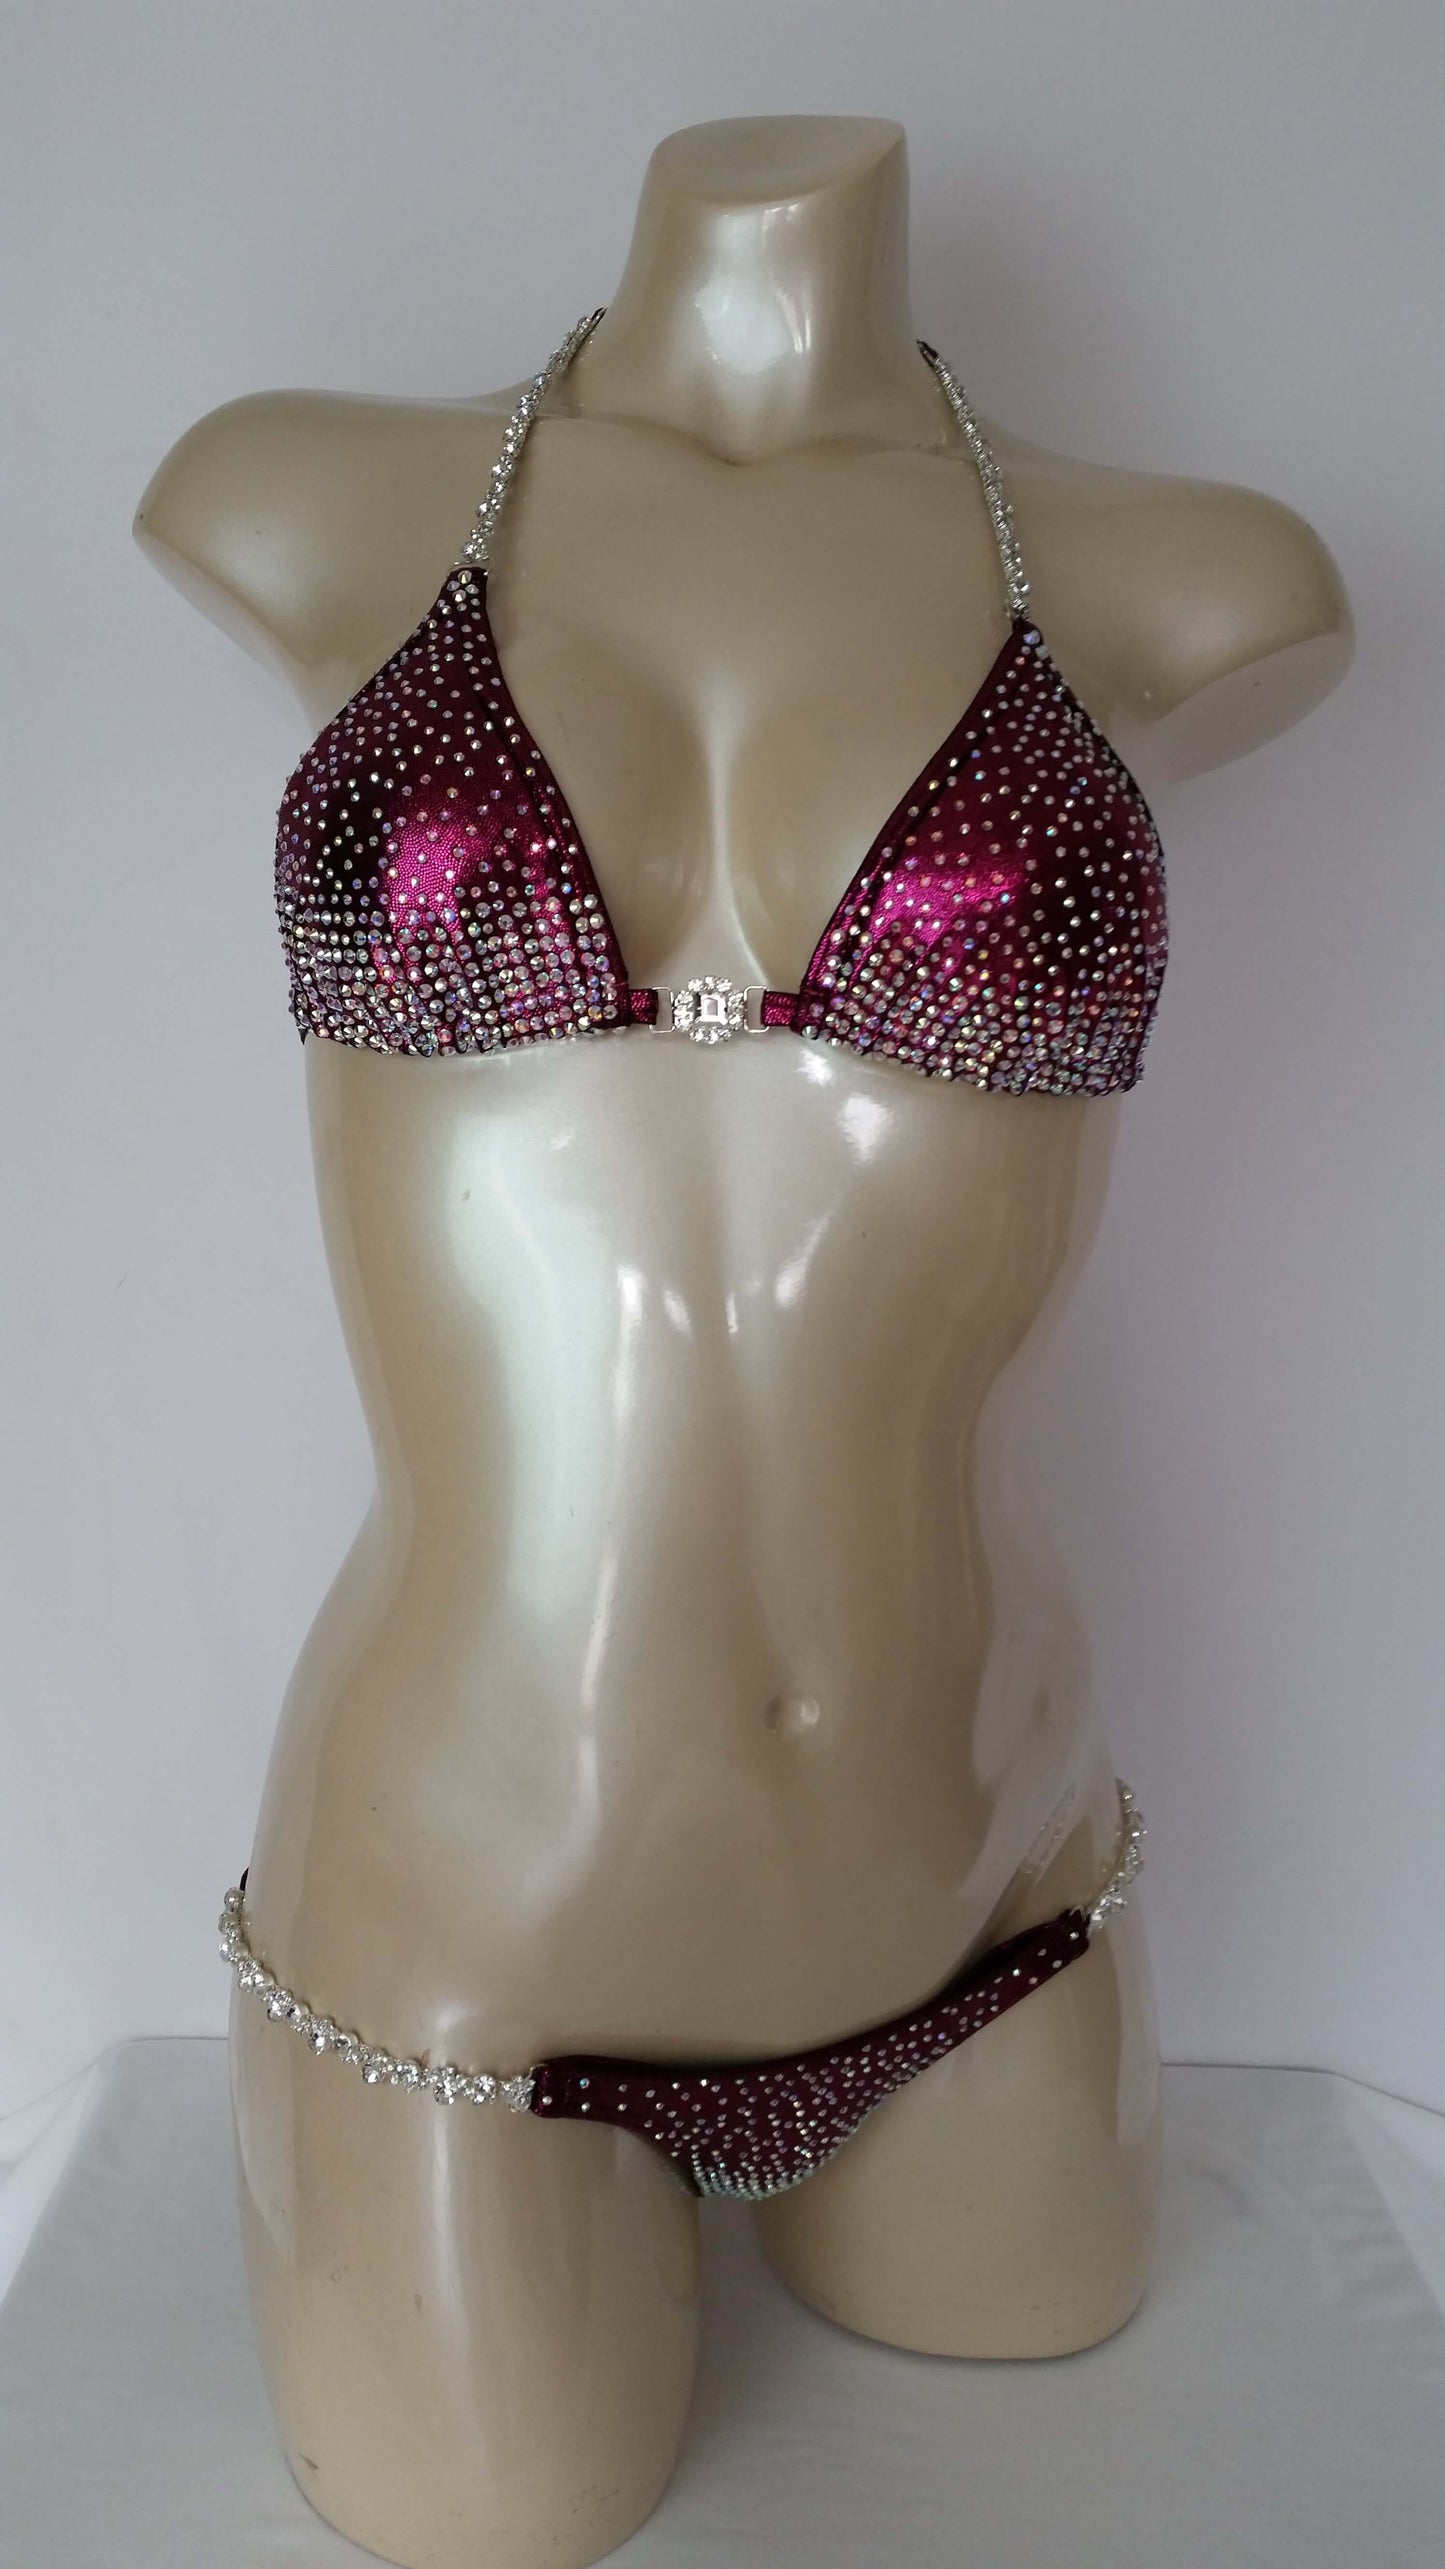 Maroon bikini with AB rhinestones in a reverse cascade pattern